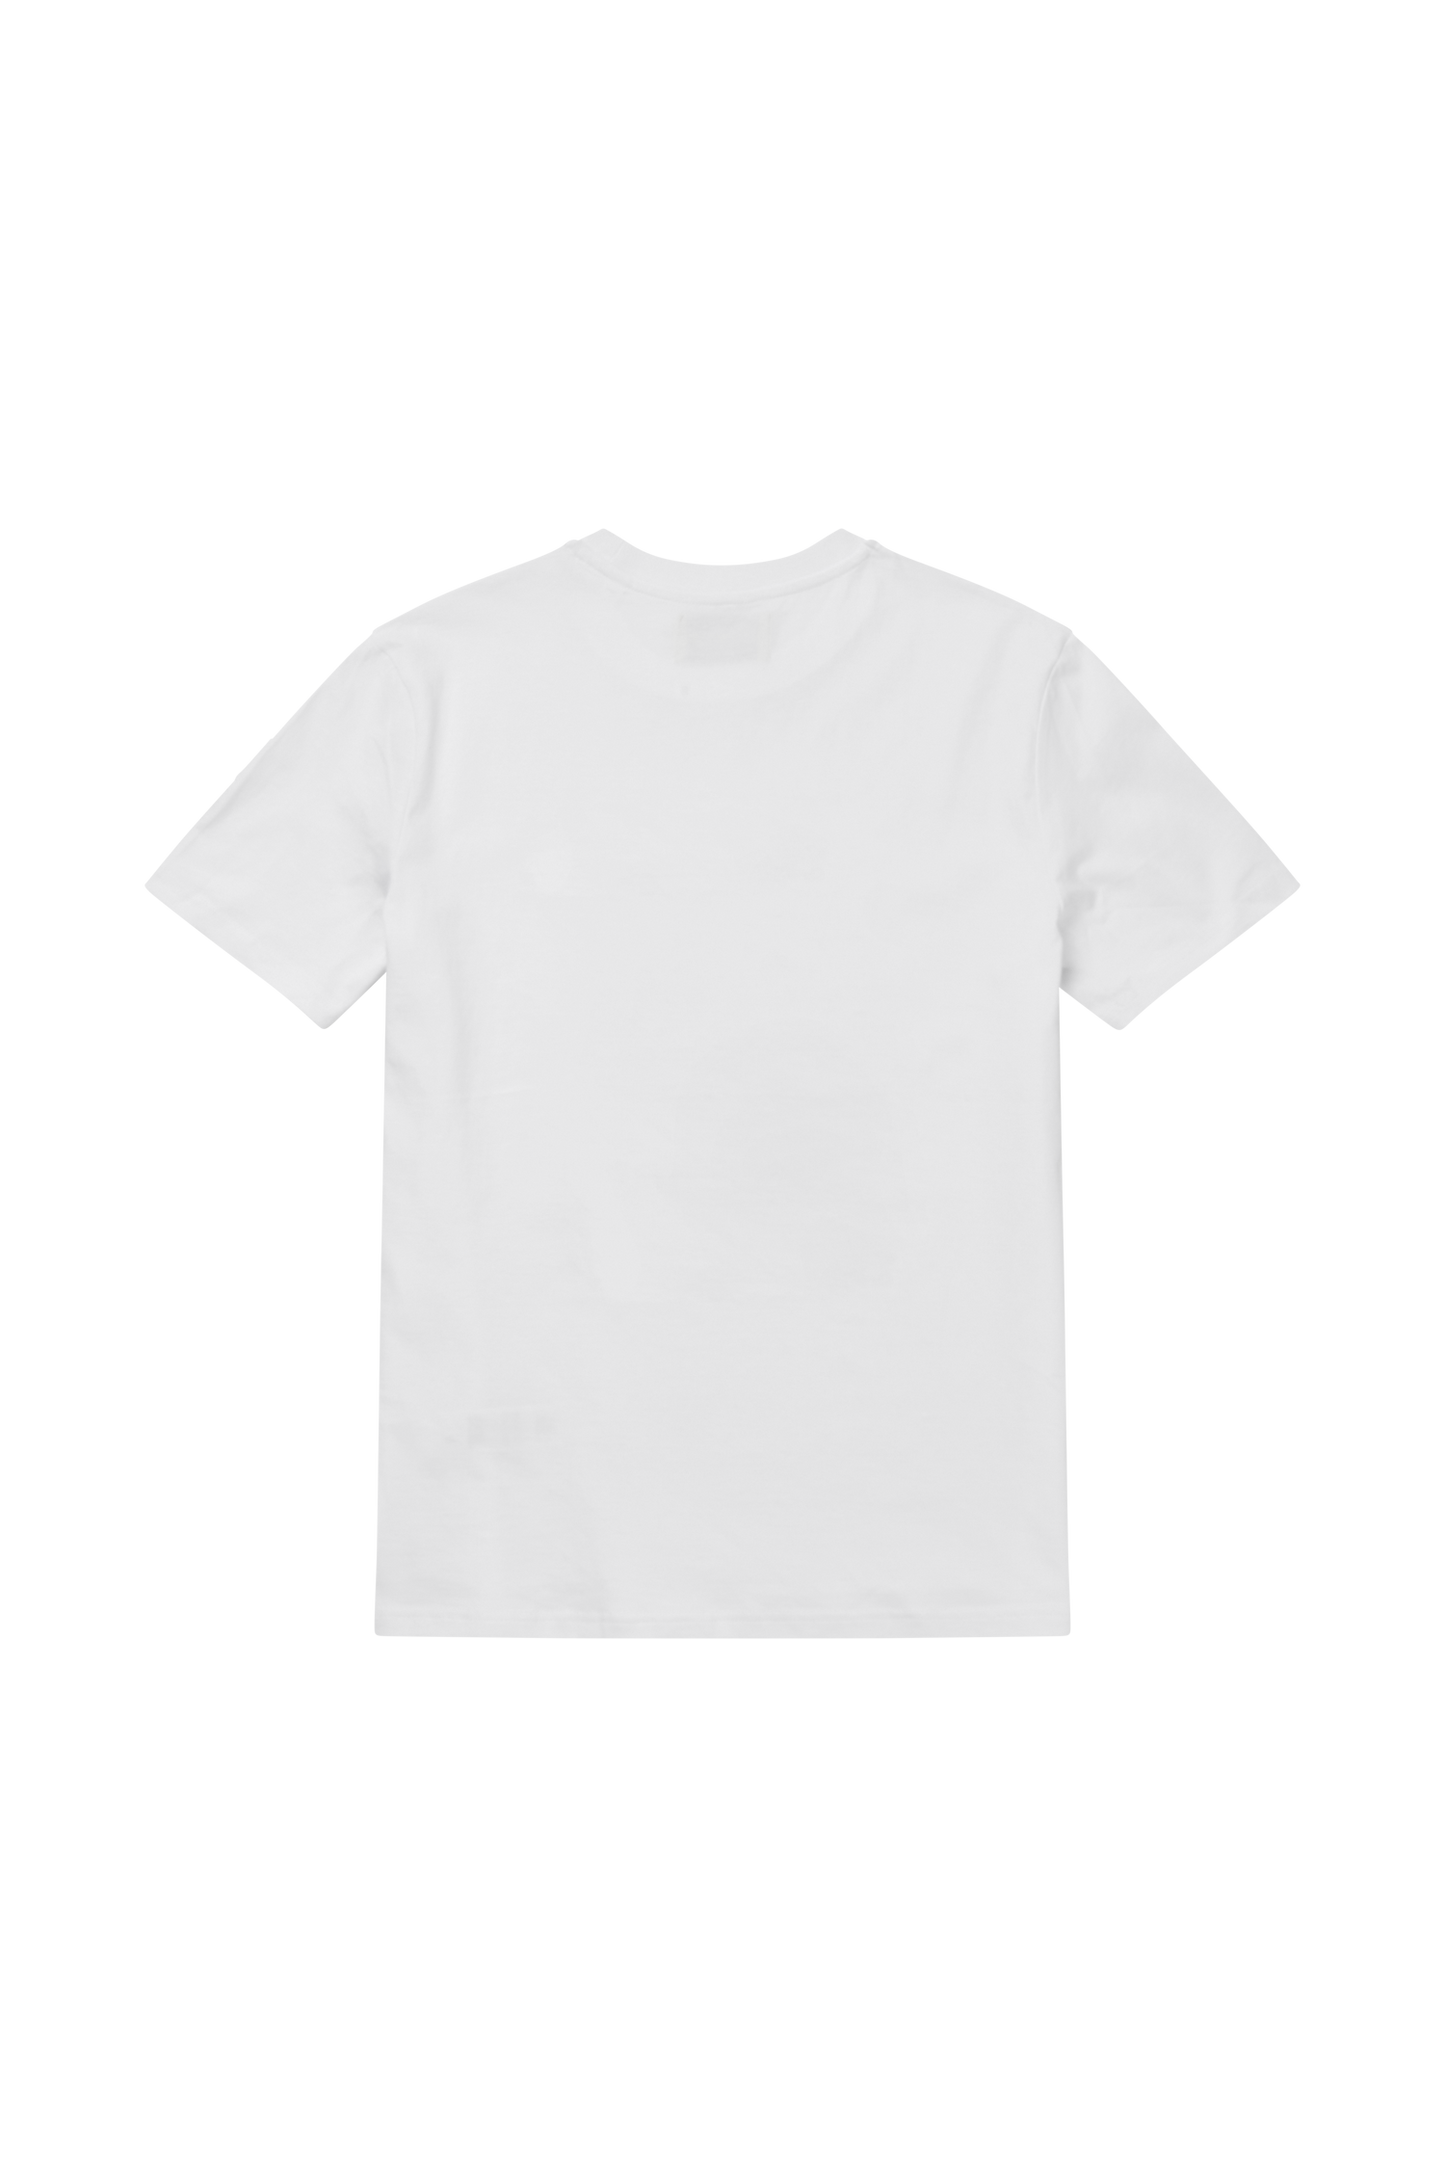 Basic Offsocial t-shirt